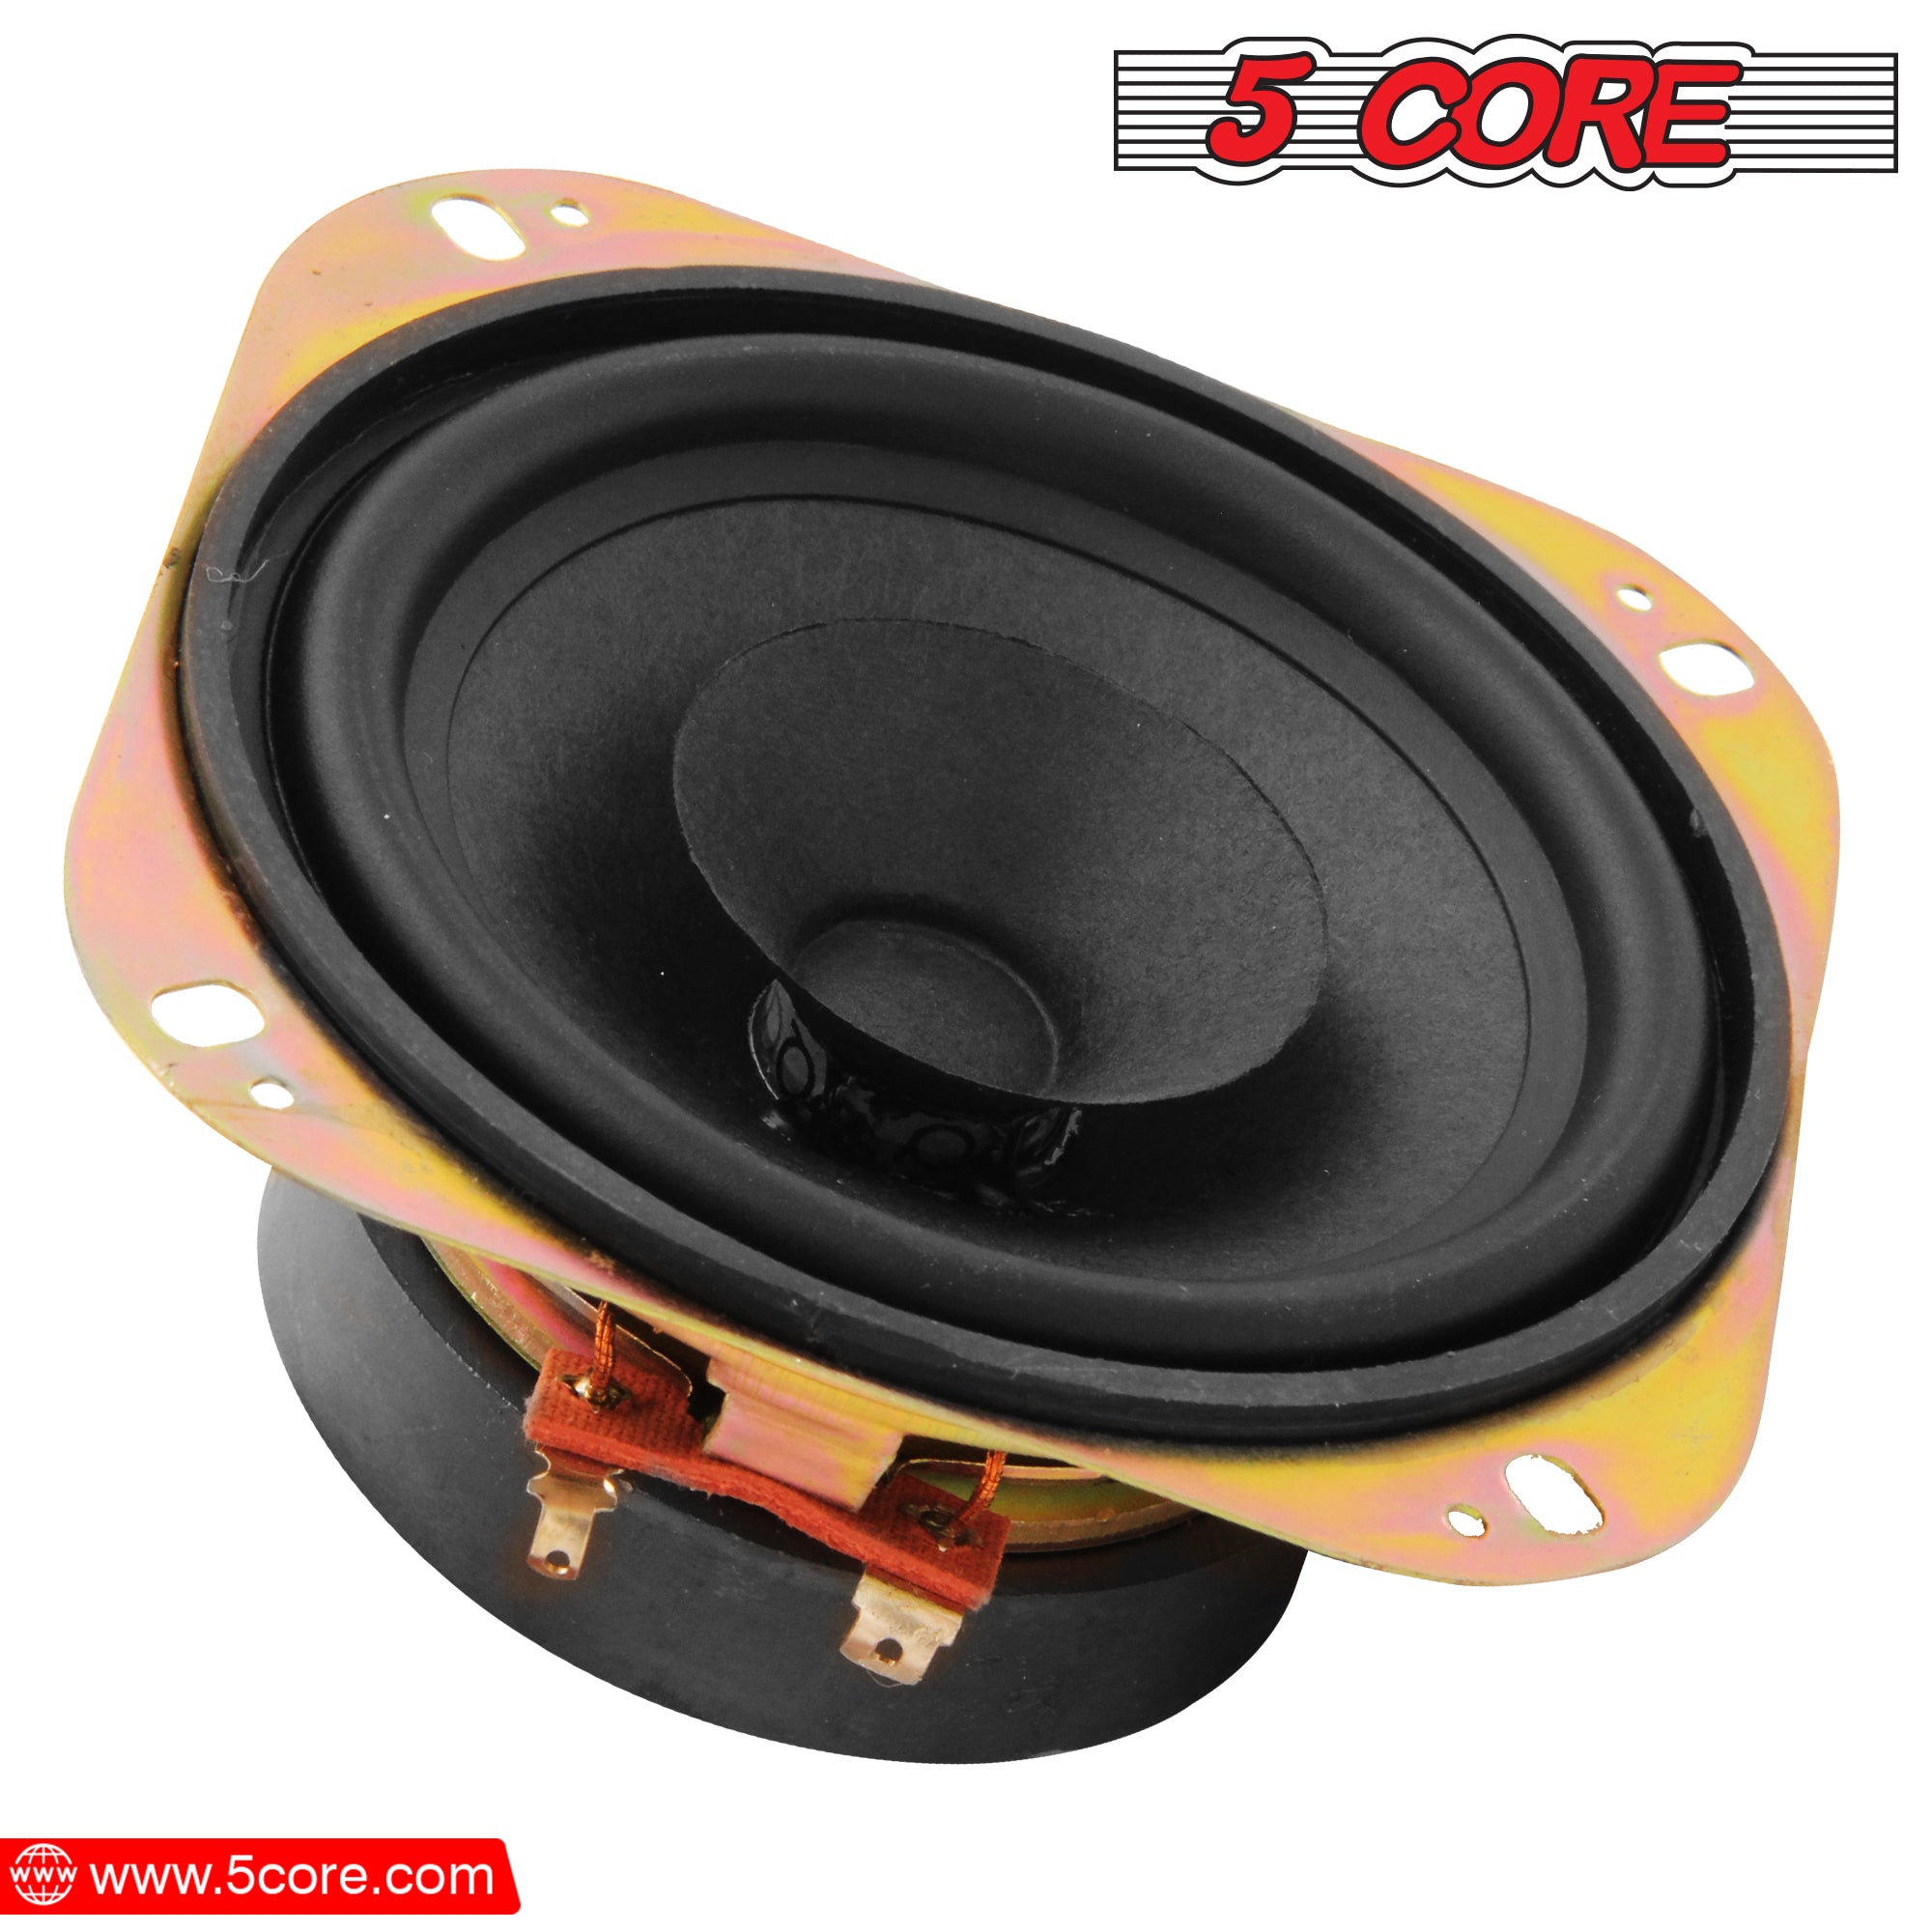 5 Core 4 inch Car Speaker 2 Pieces 40W Peak Power 4 Ohm 0.81 CCAW Copper Voice Coil Premium High Performance Raw Replacement Speakers - WF472DC 1 Pair